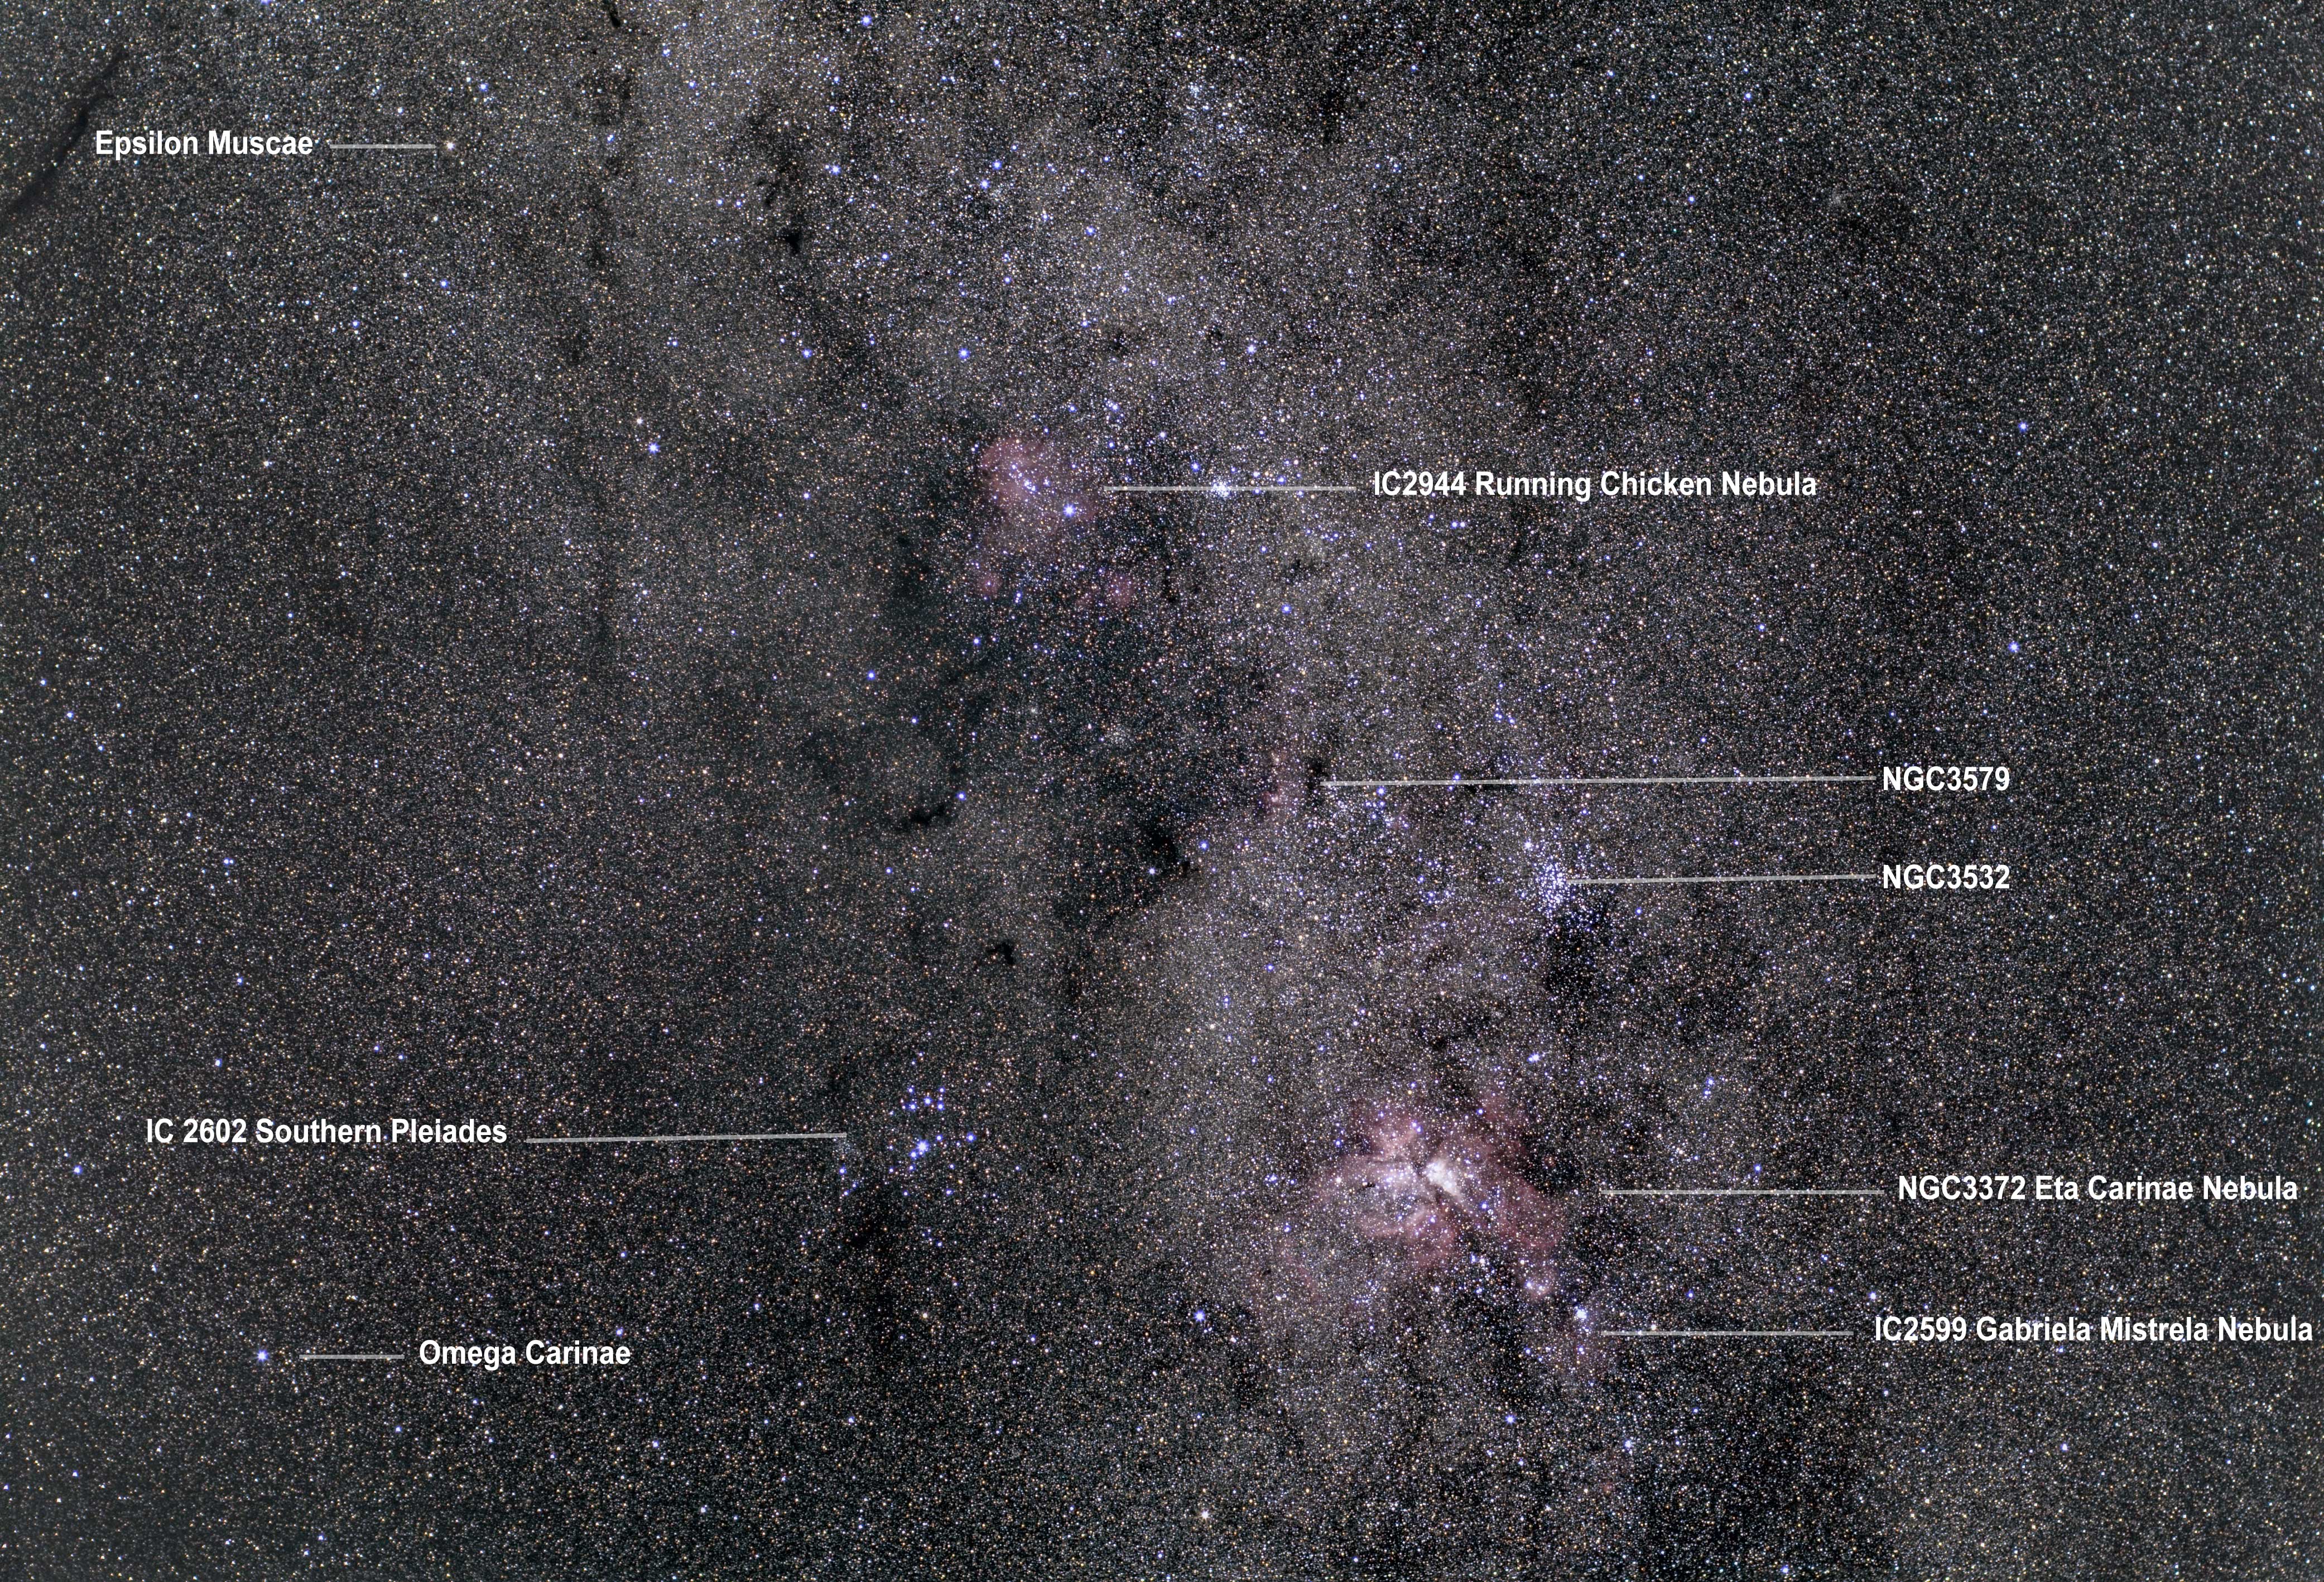 Eta Carinae wide field captured using an Olympus 50mm lens  & ASI294MC Pro camera